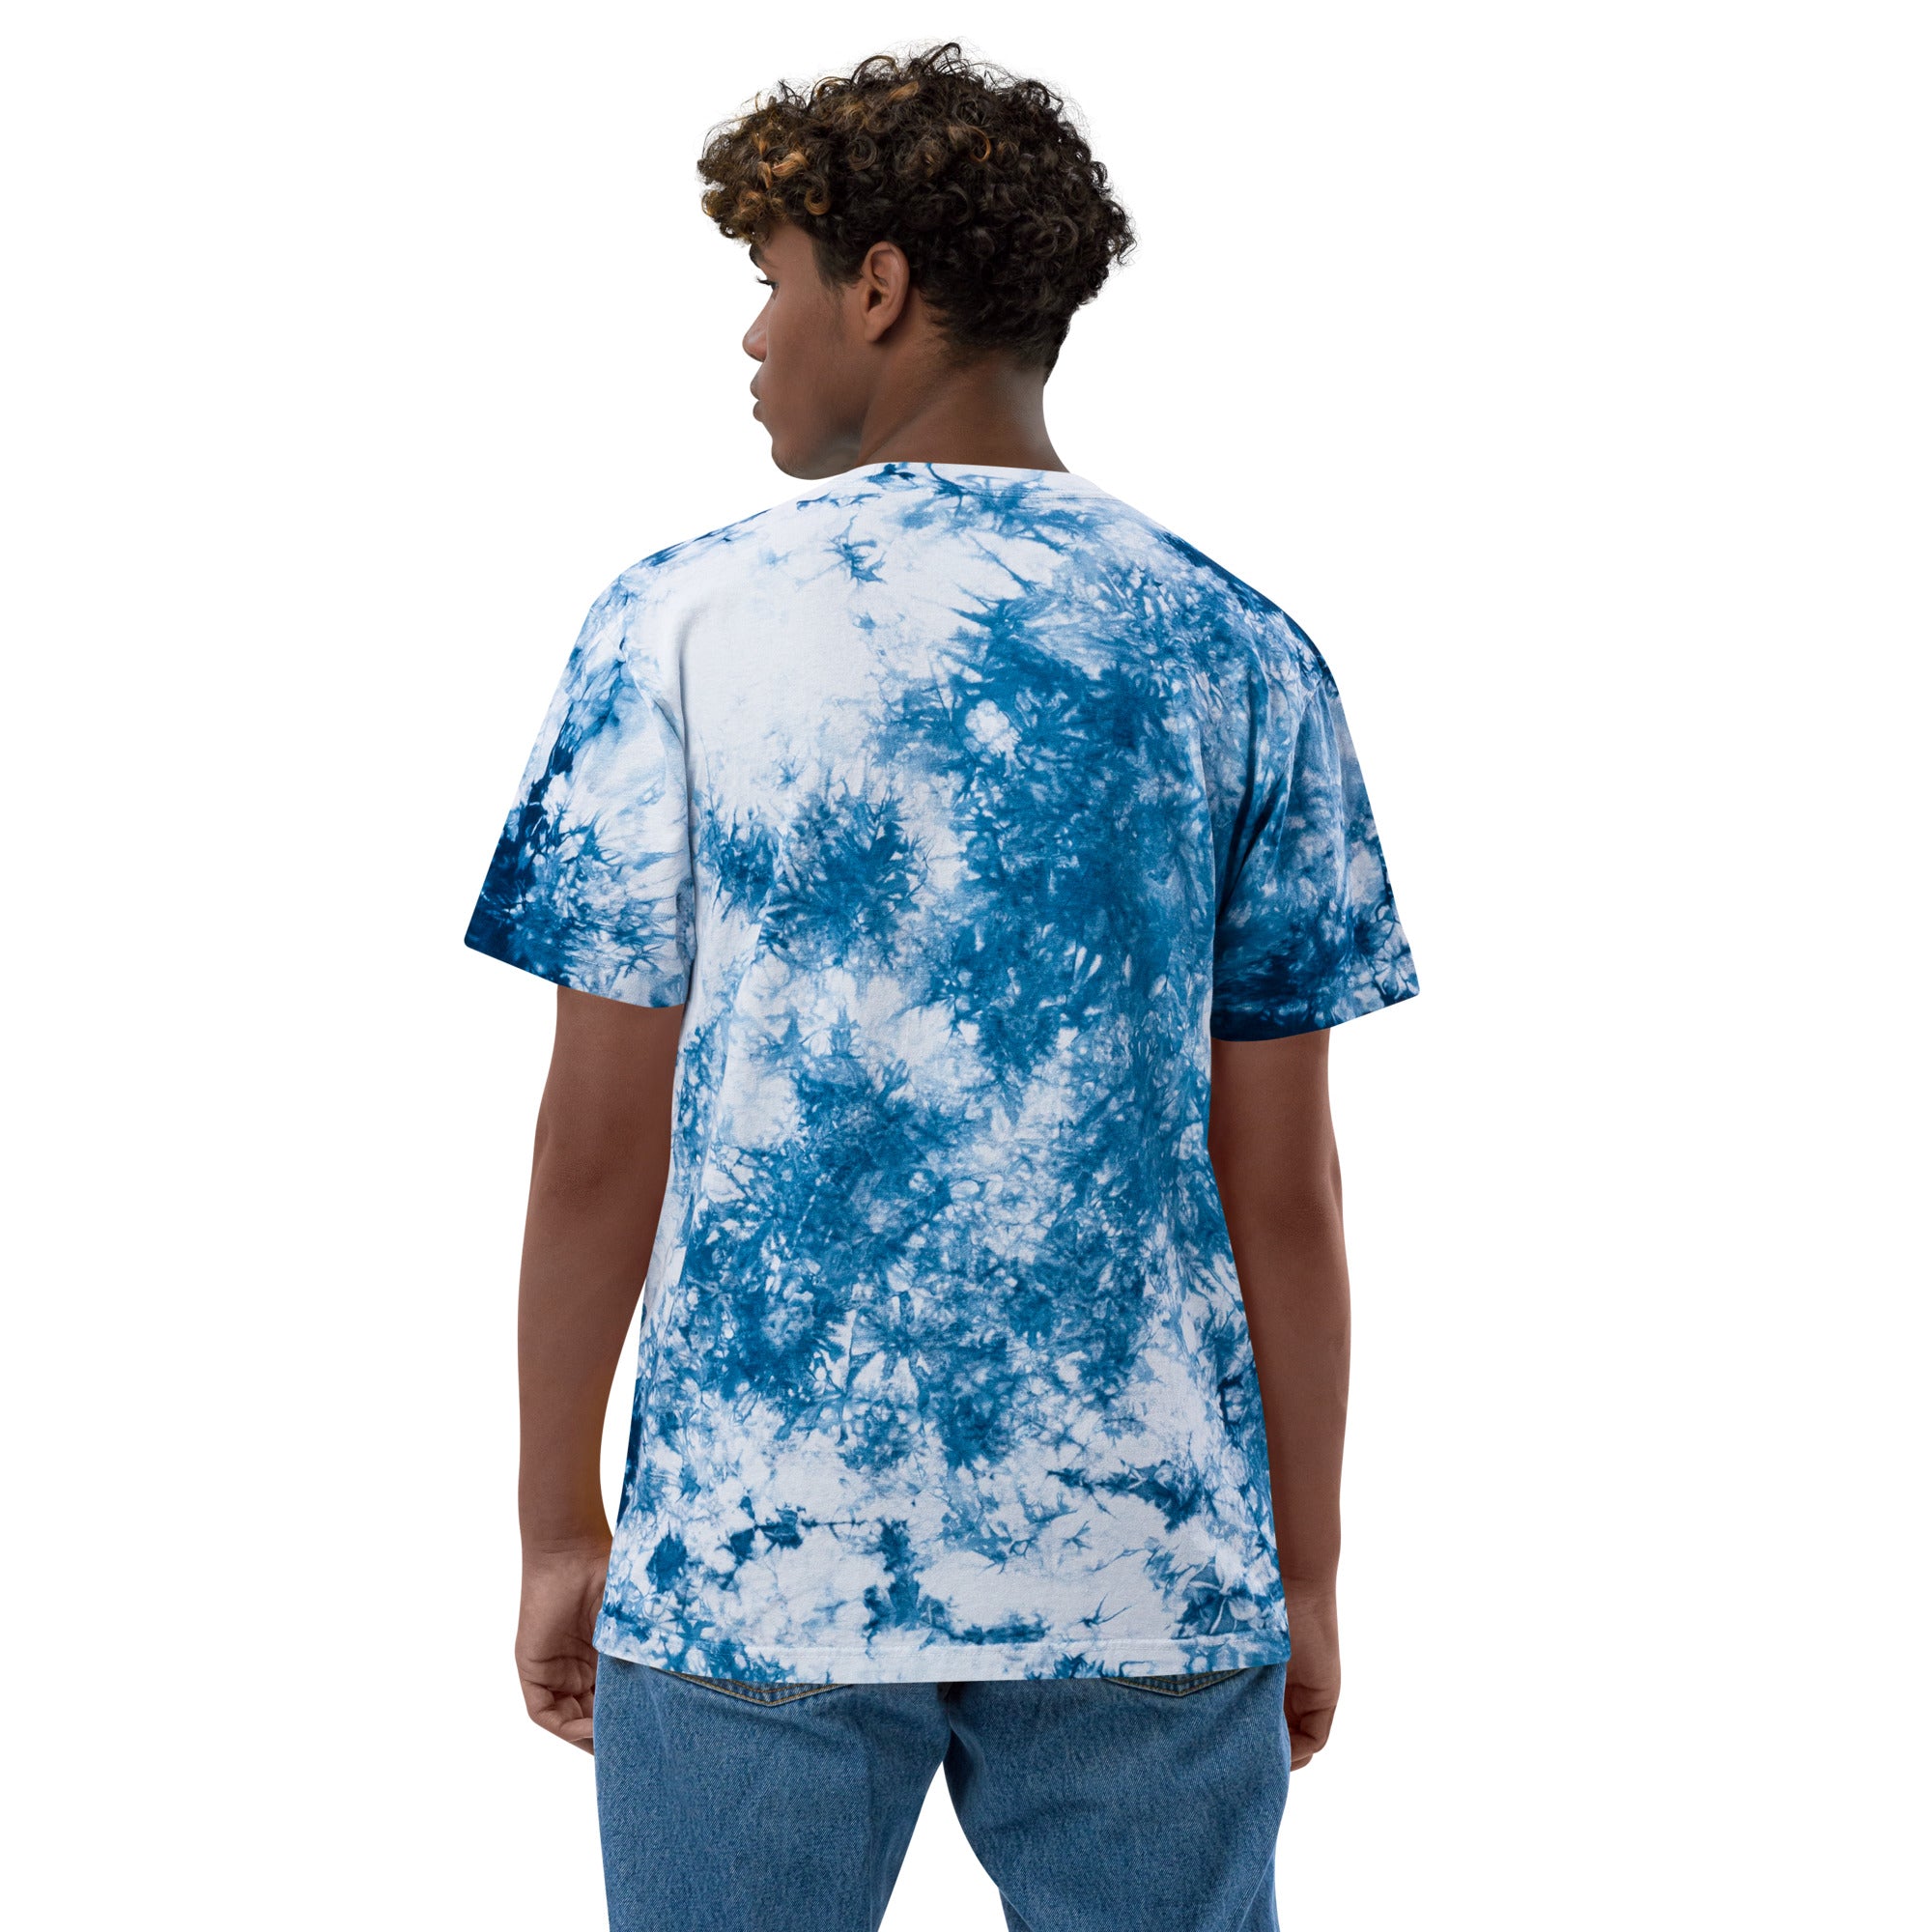 Oversized tie-dye t-shirt – TahoeMushroomCompany